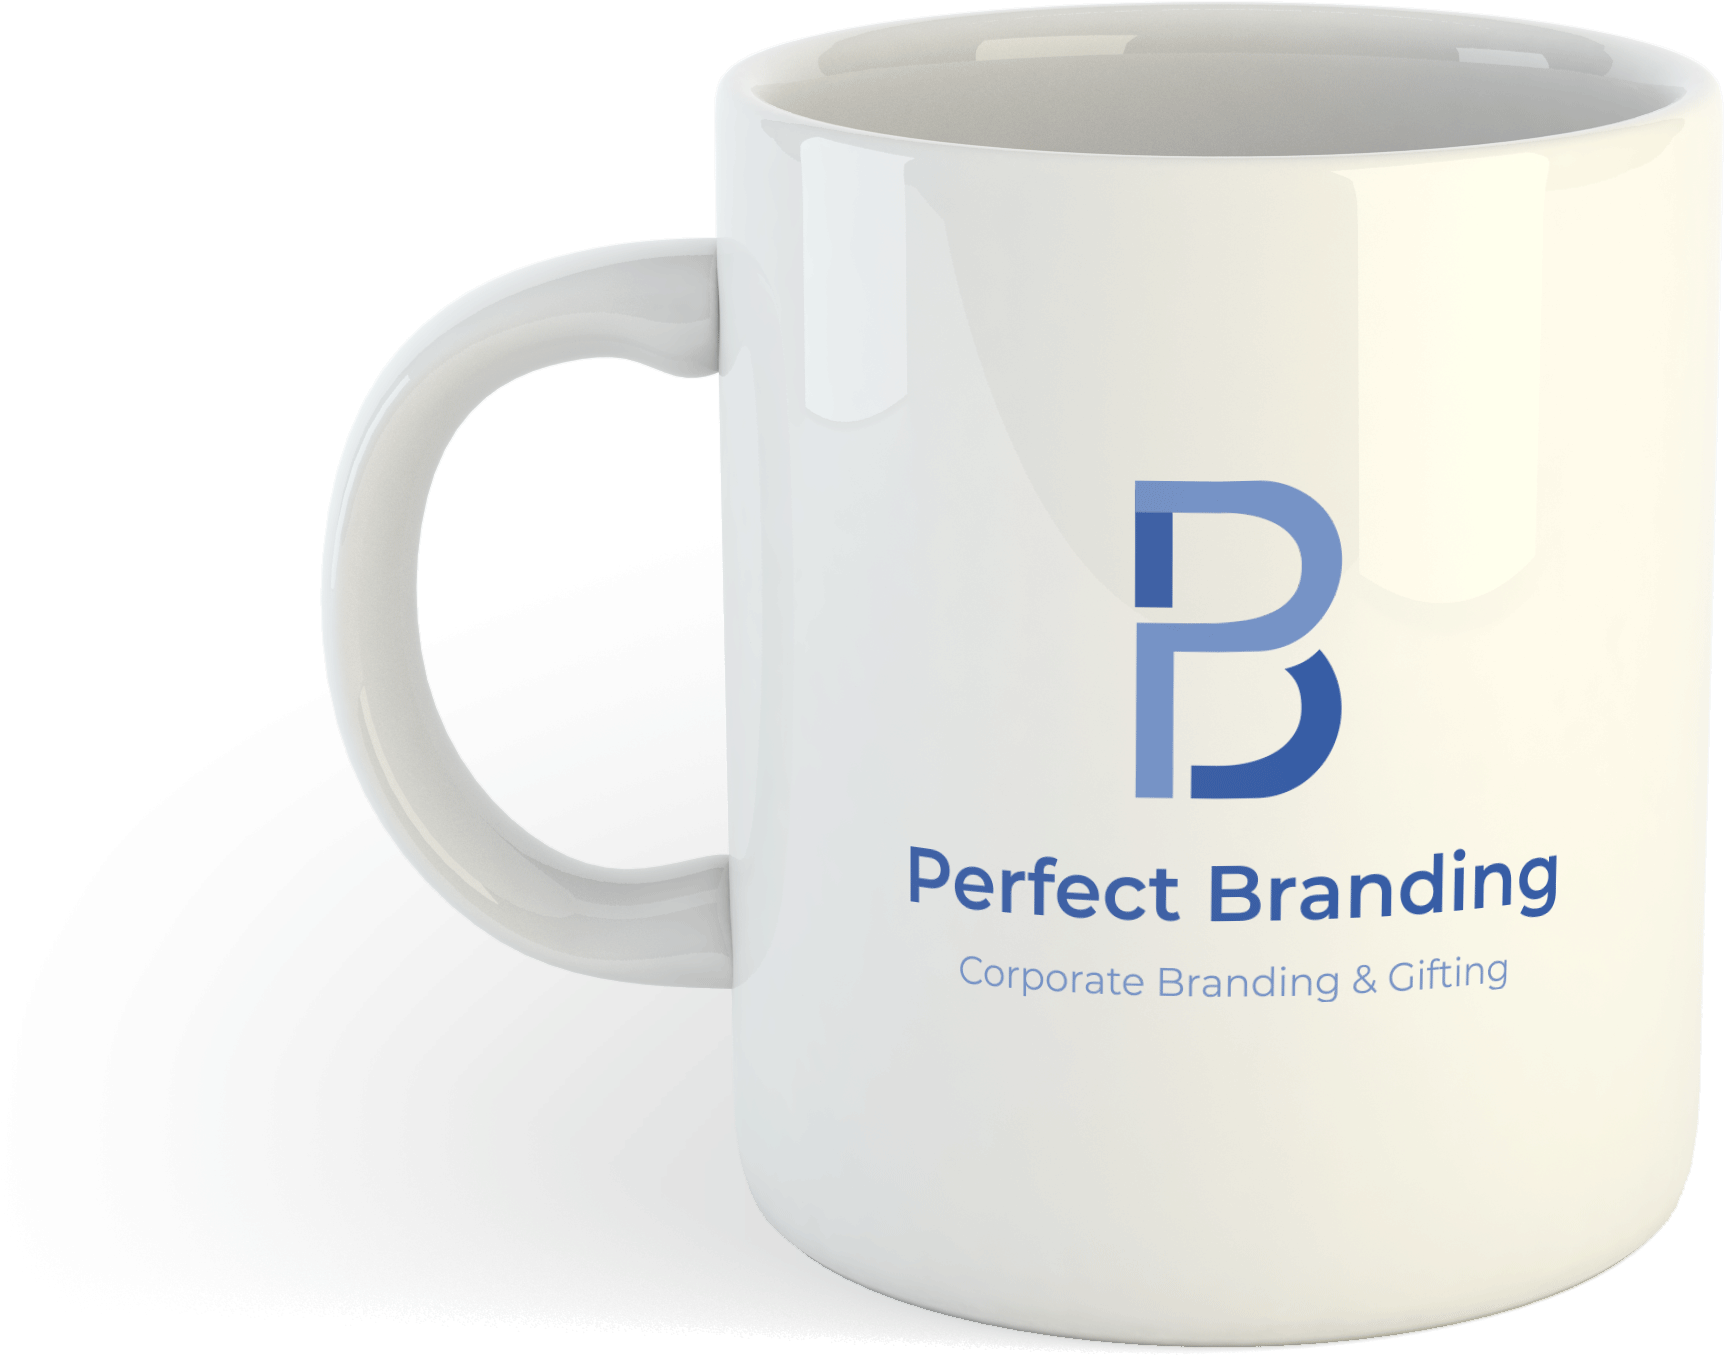 Branded White Coffee Mug PNG image